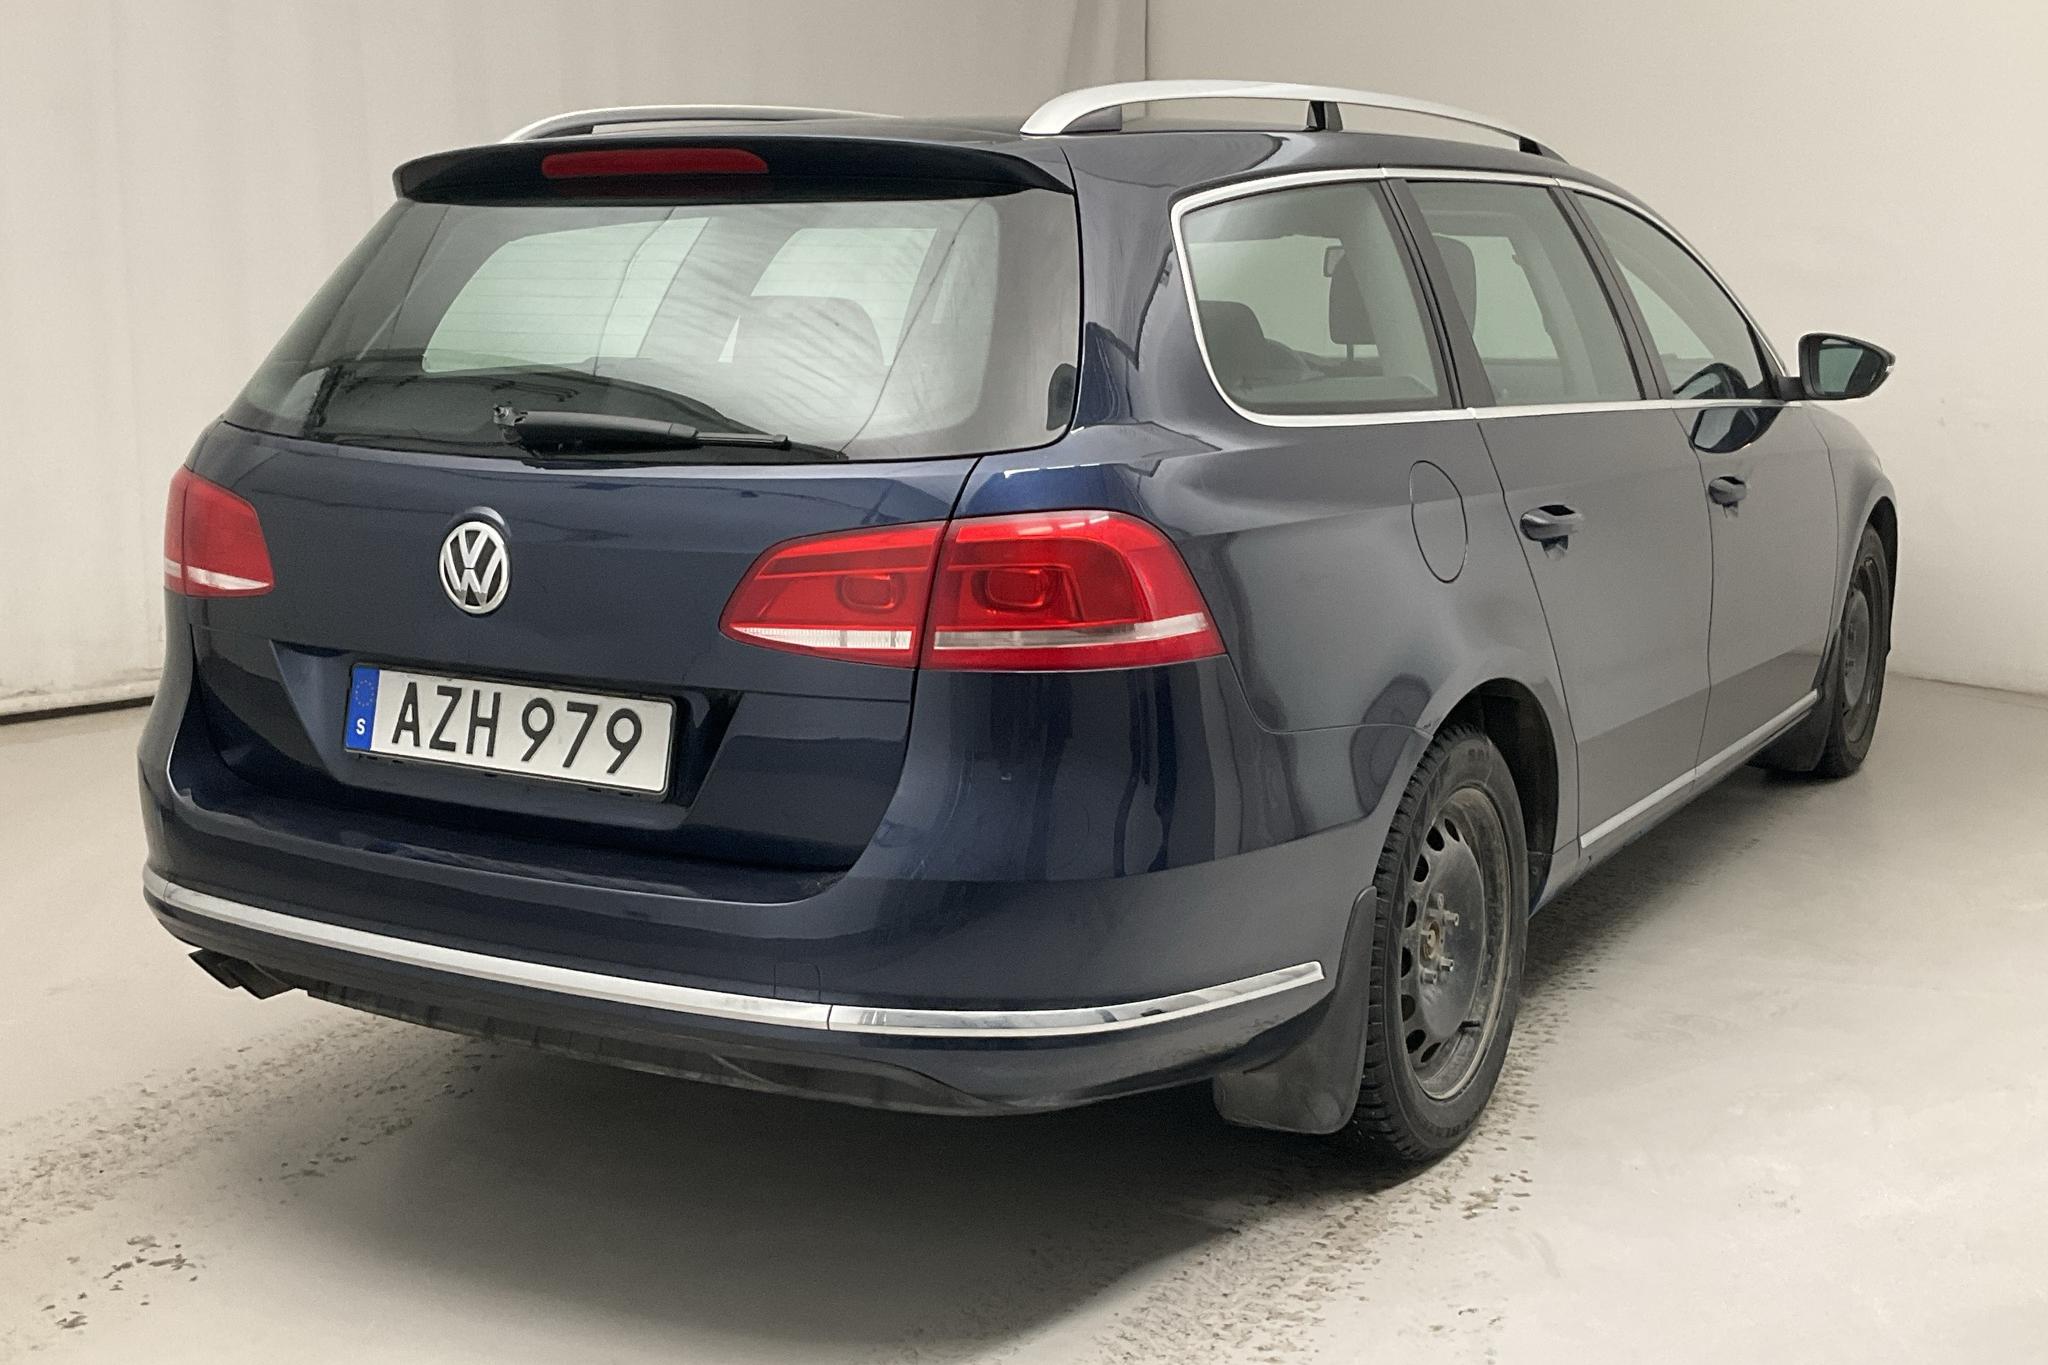 VW Passat 2.0 TDI BlueMotion Technology Variant 4Motion (140hk) - 127 010 km - Manual - Dark Blue - 2015